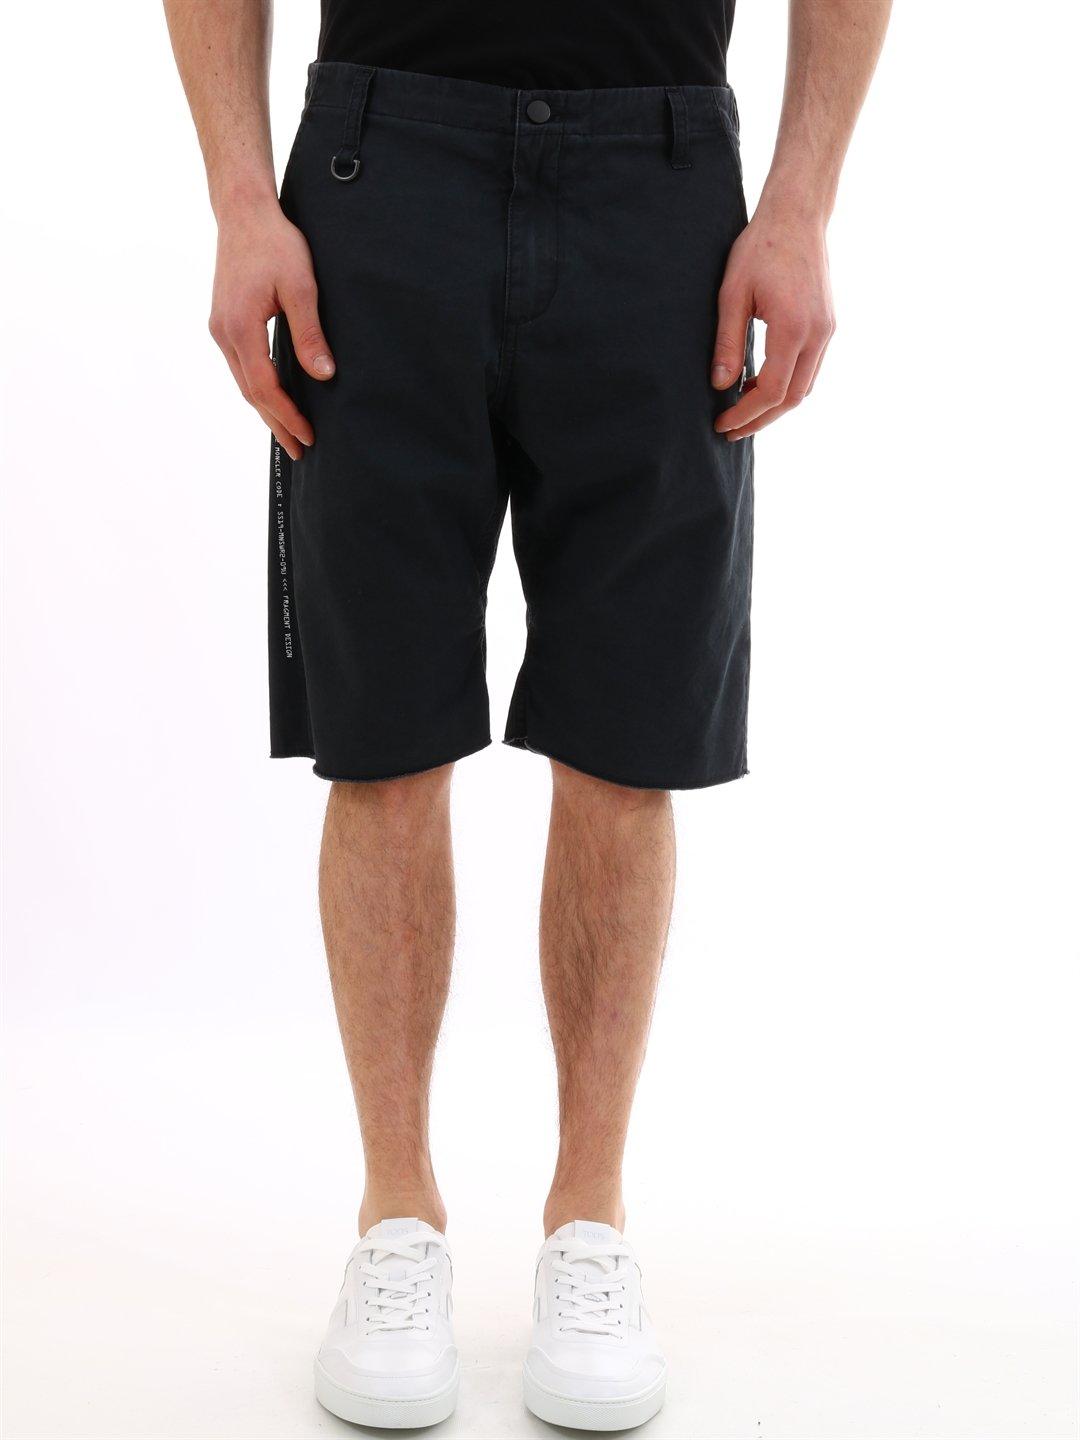 Moncler Bermuda Tailored Shorts in Black for Men - Lyst